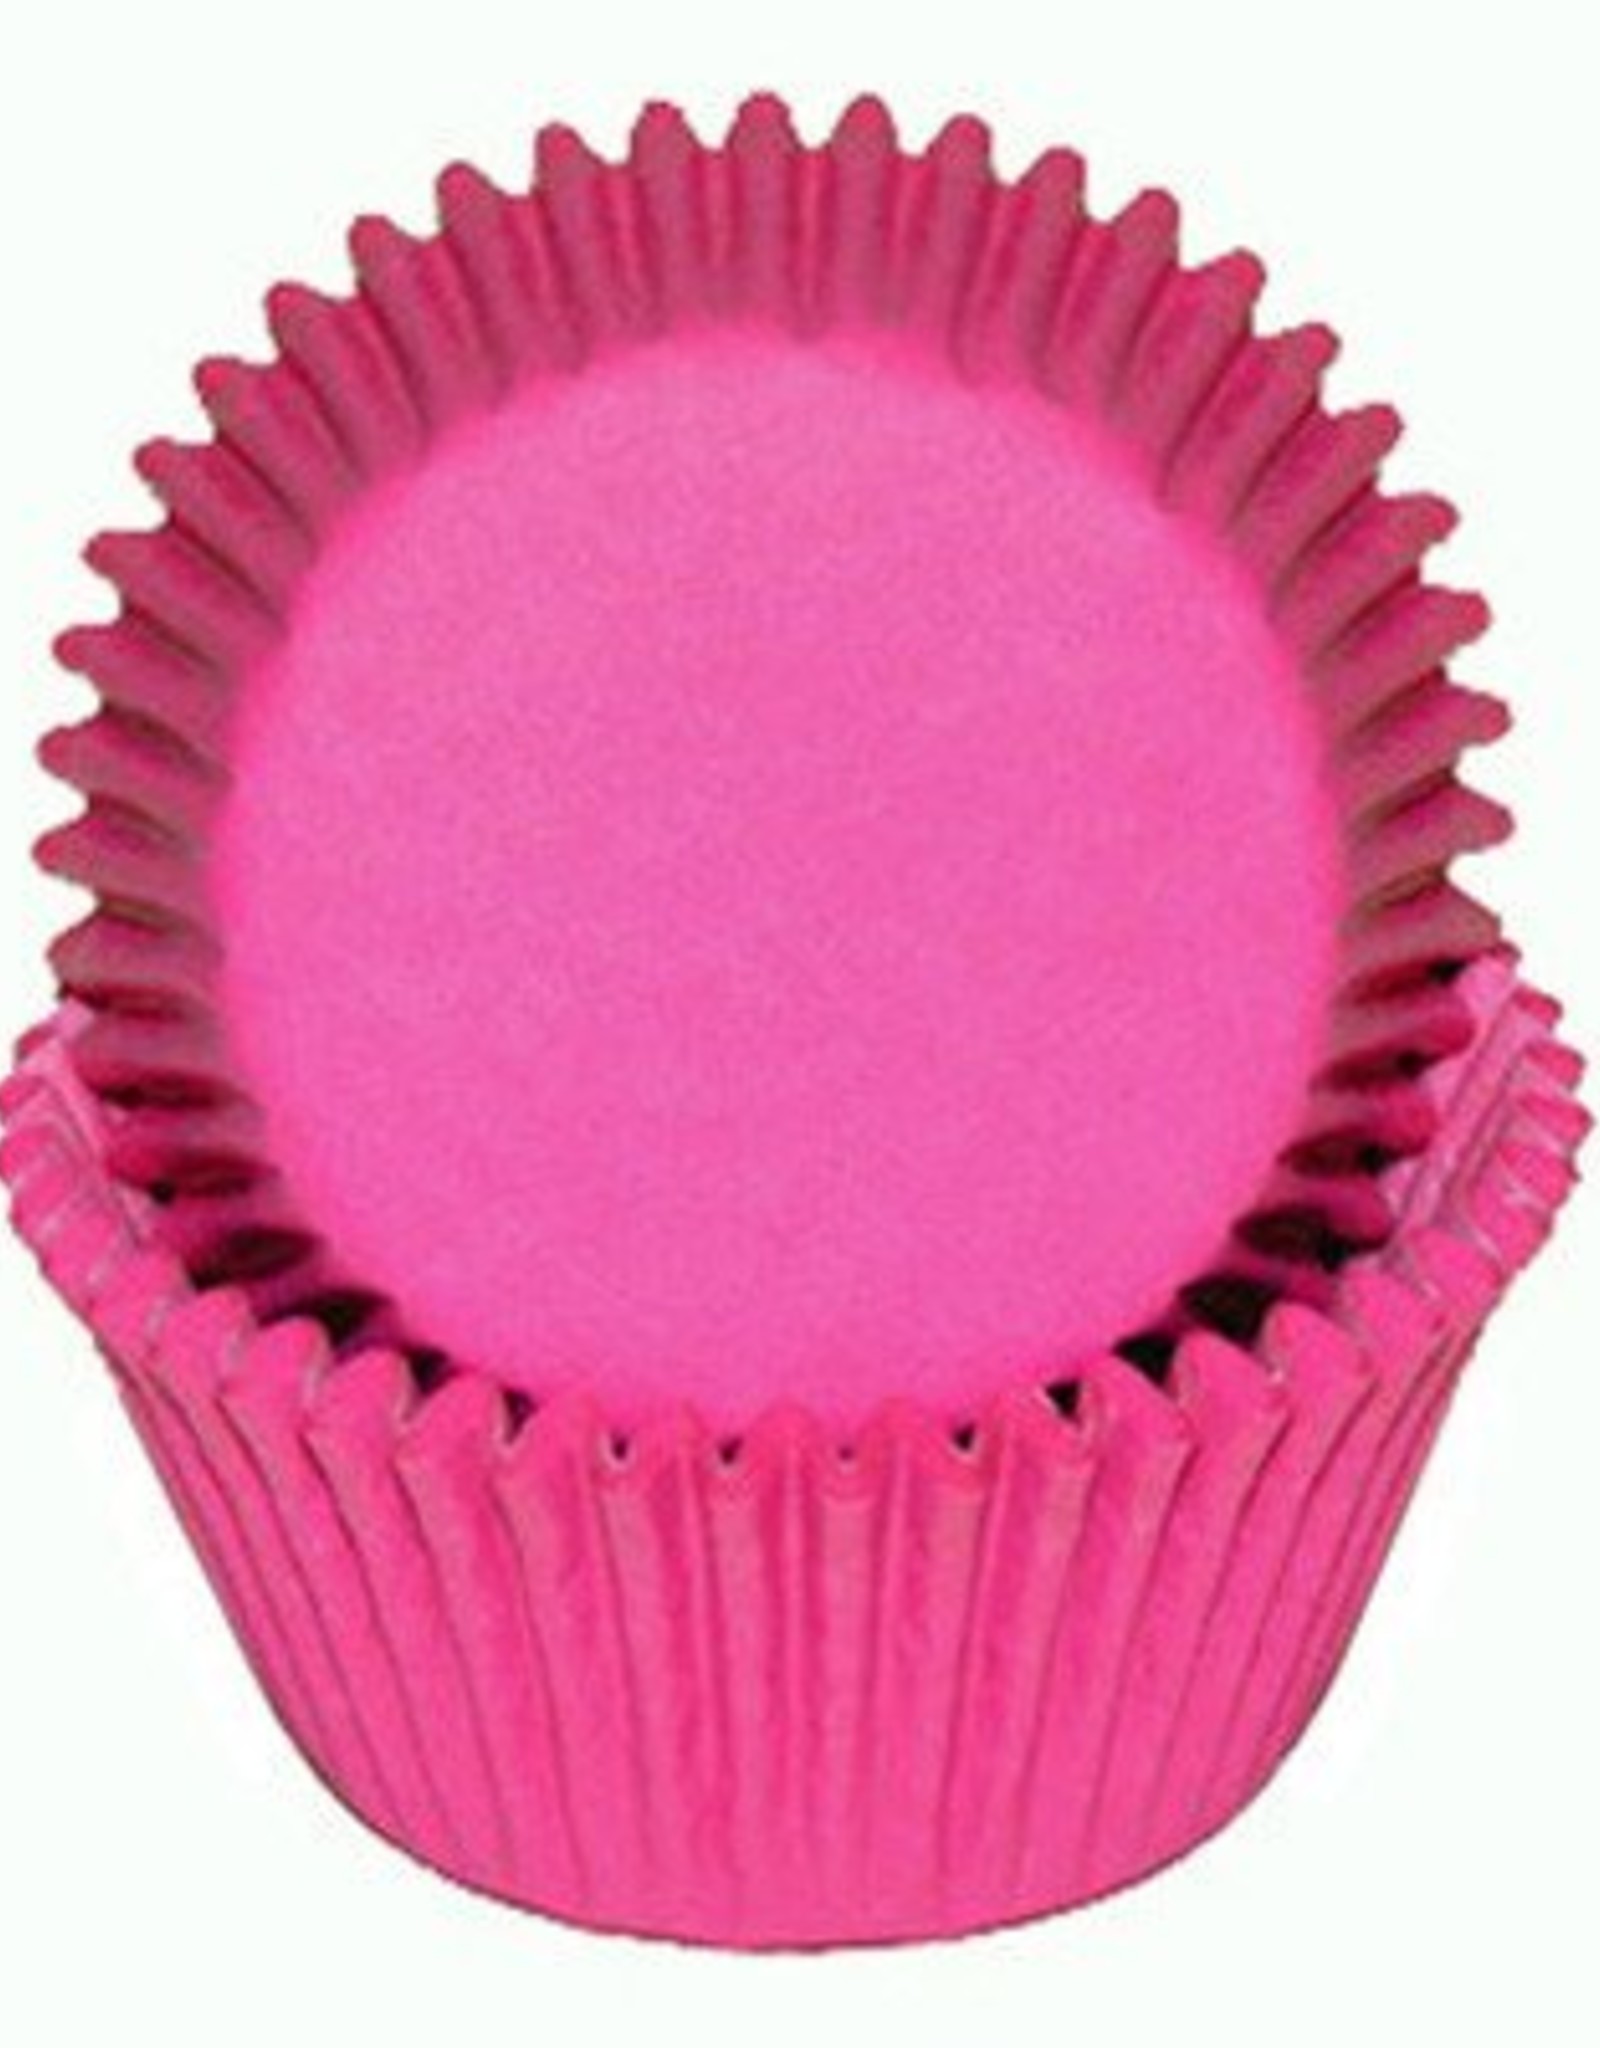 Hot Pink Baking Cups (30-40 per pkg)